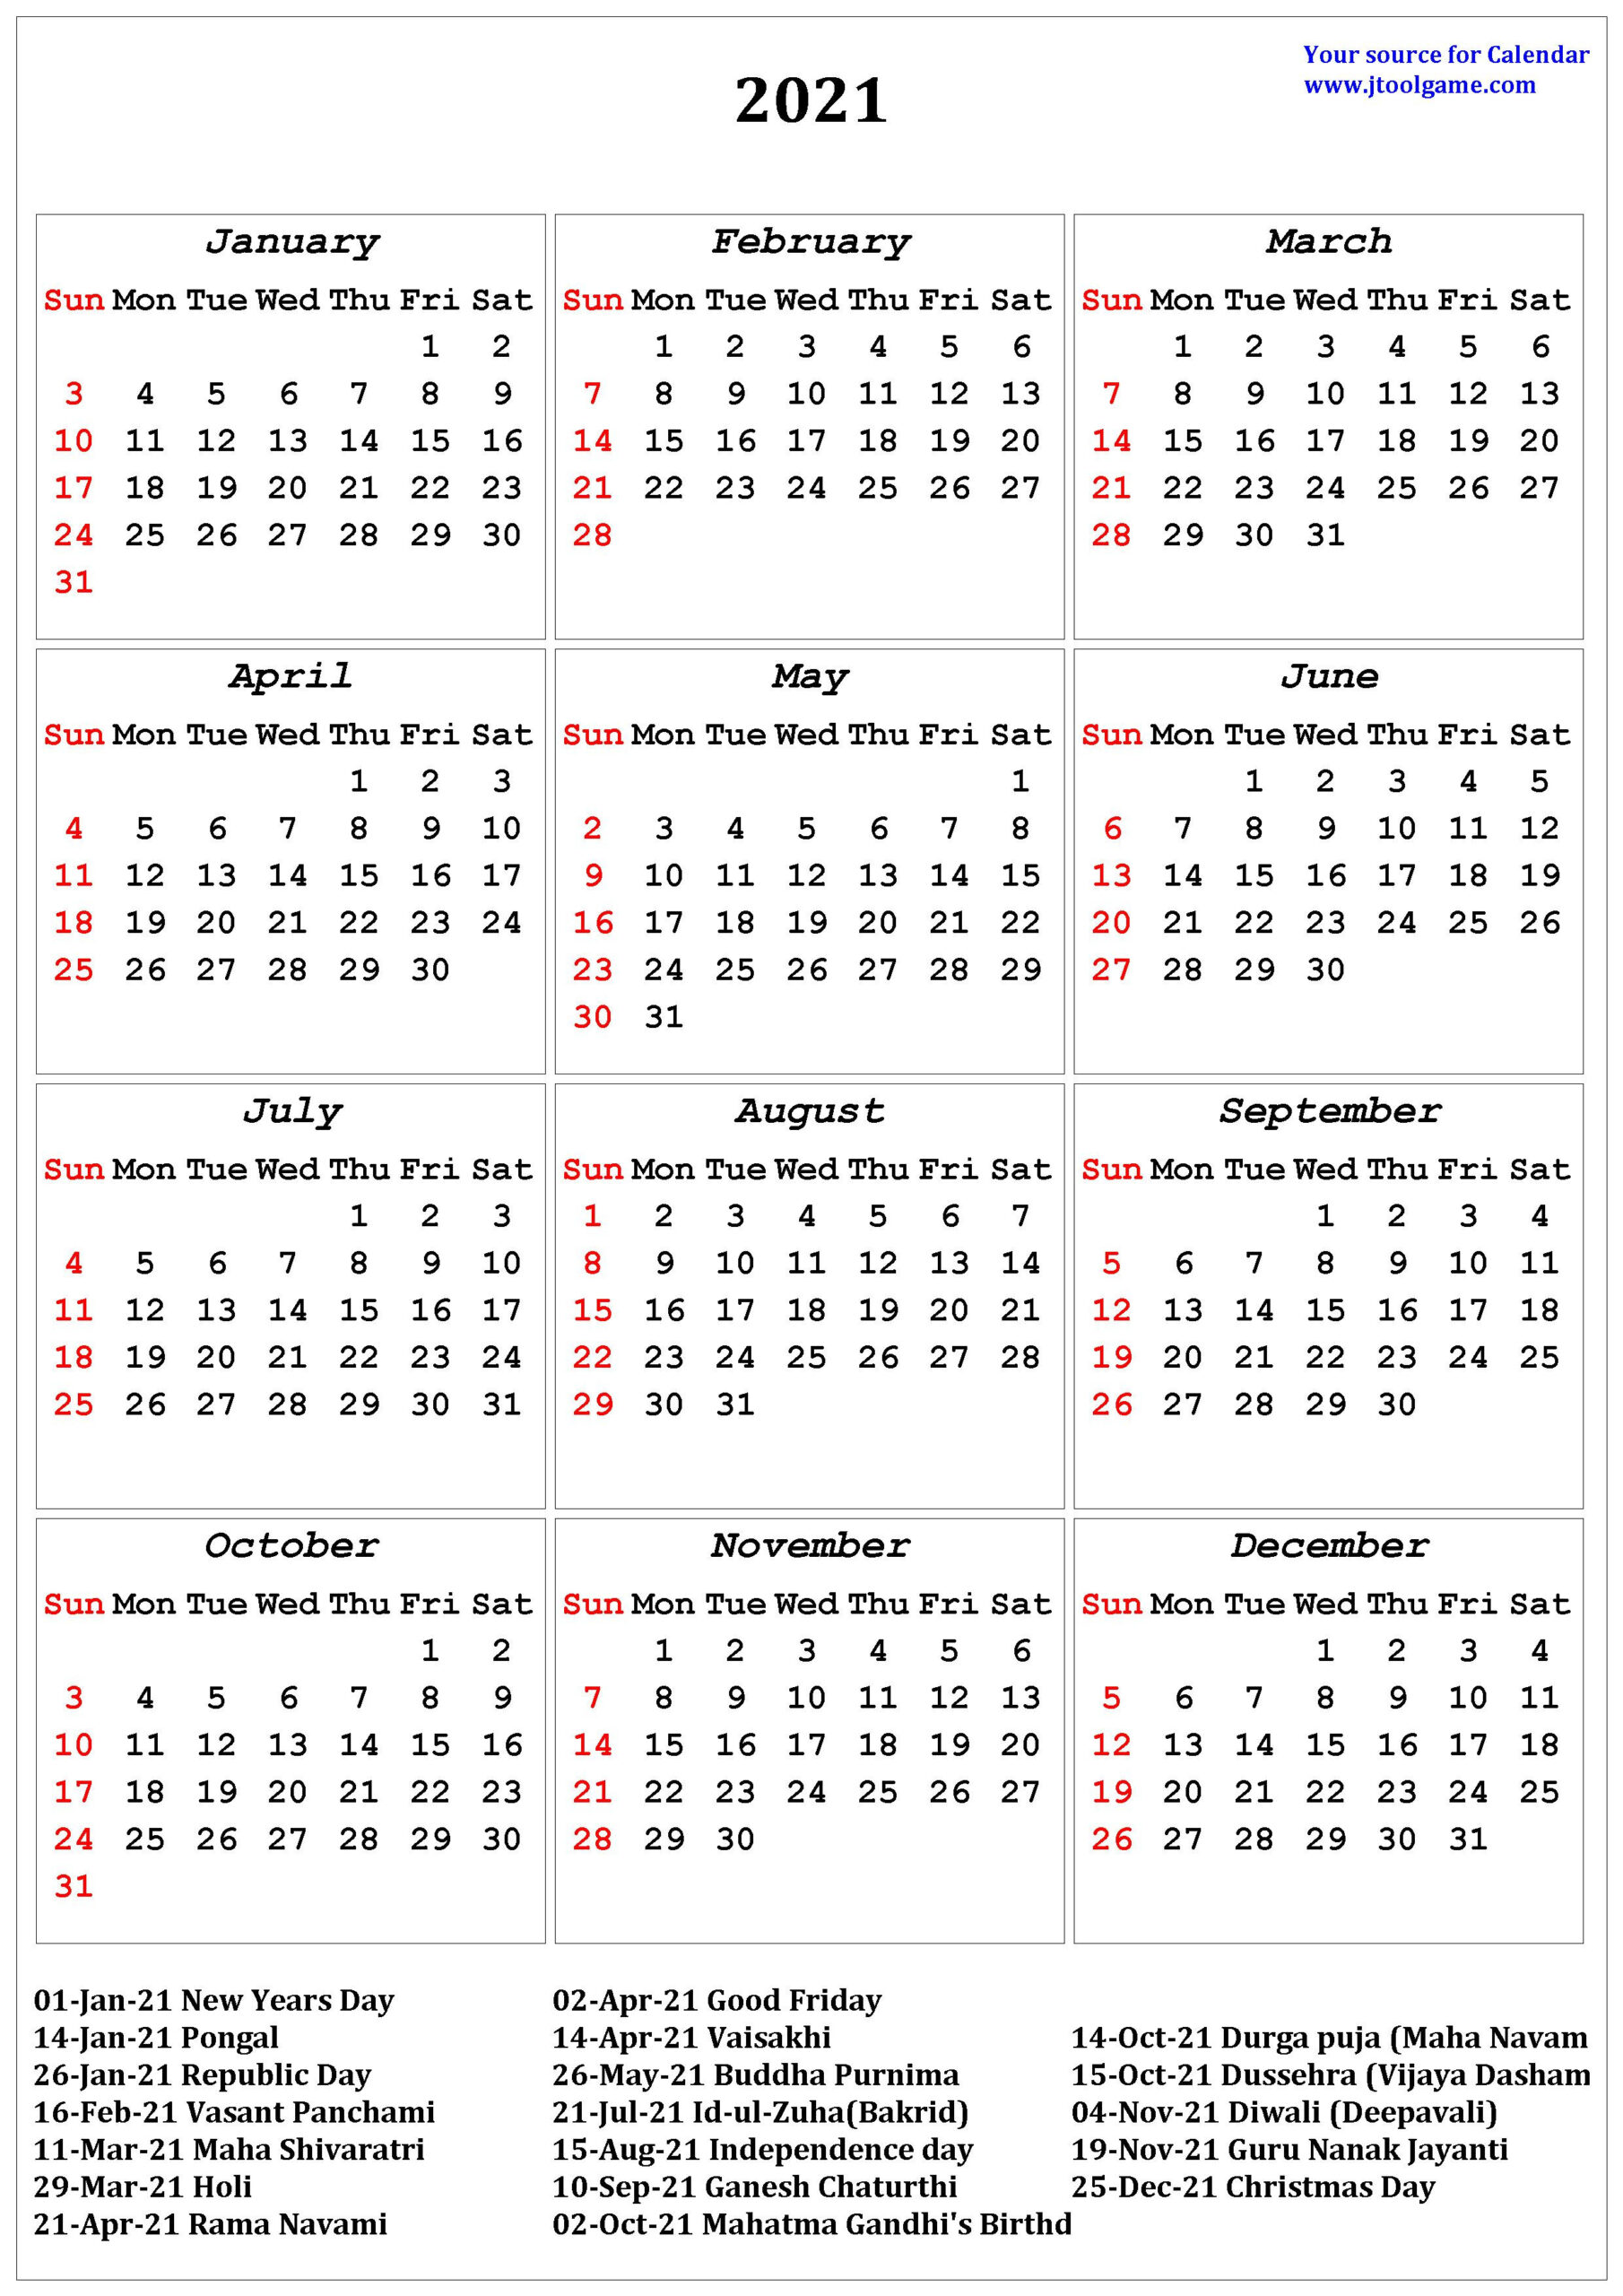 2021 Calendar - Printable Calendar With India Holidays-Indian Holidays 2021 Calendar